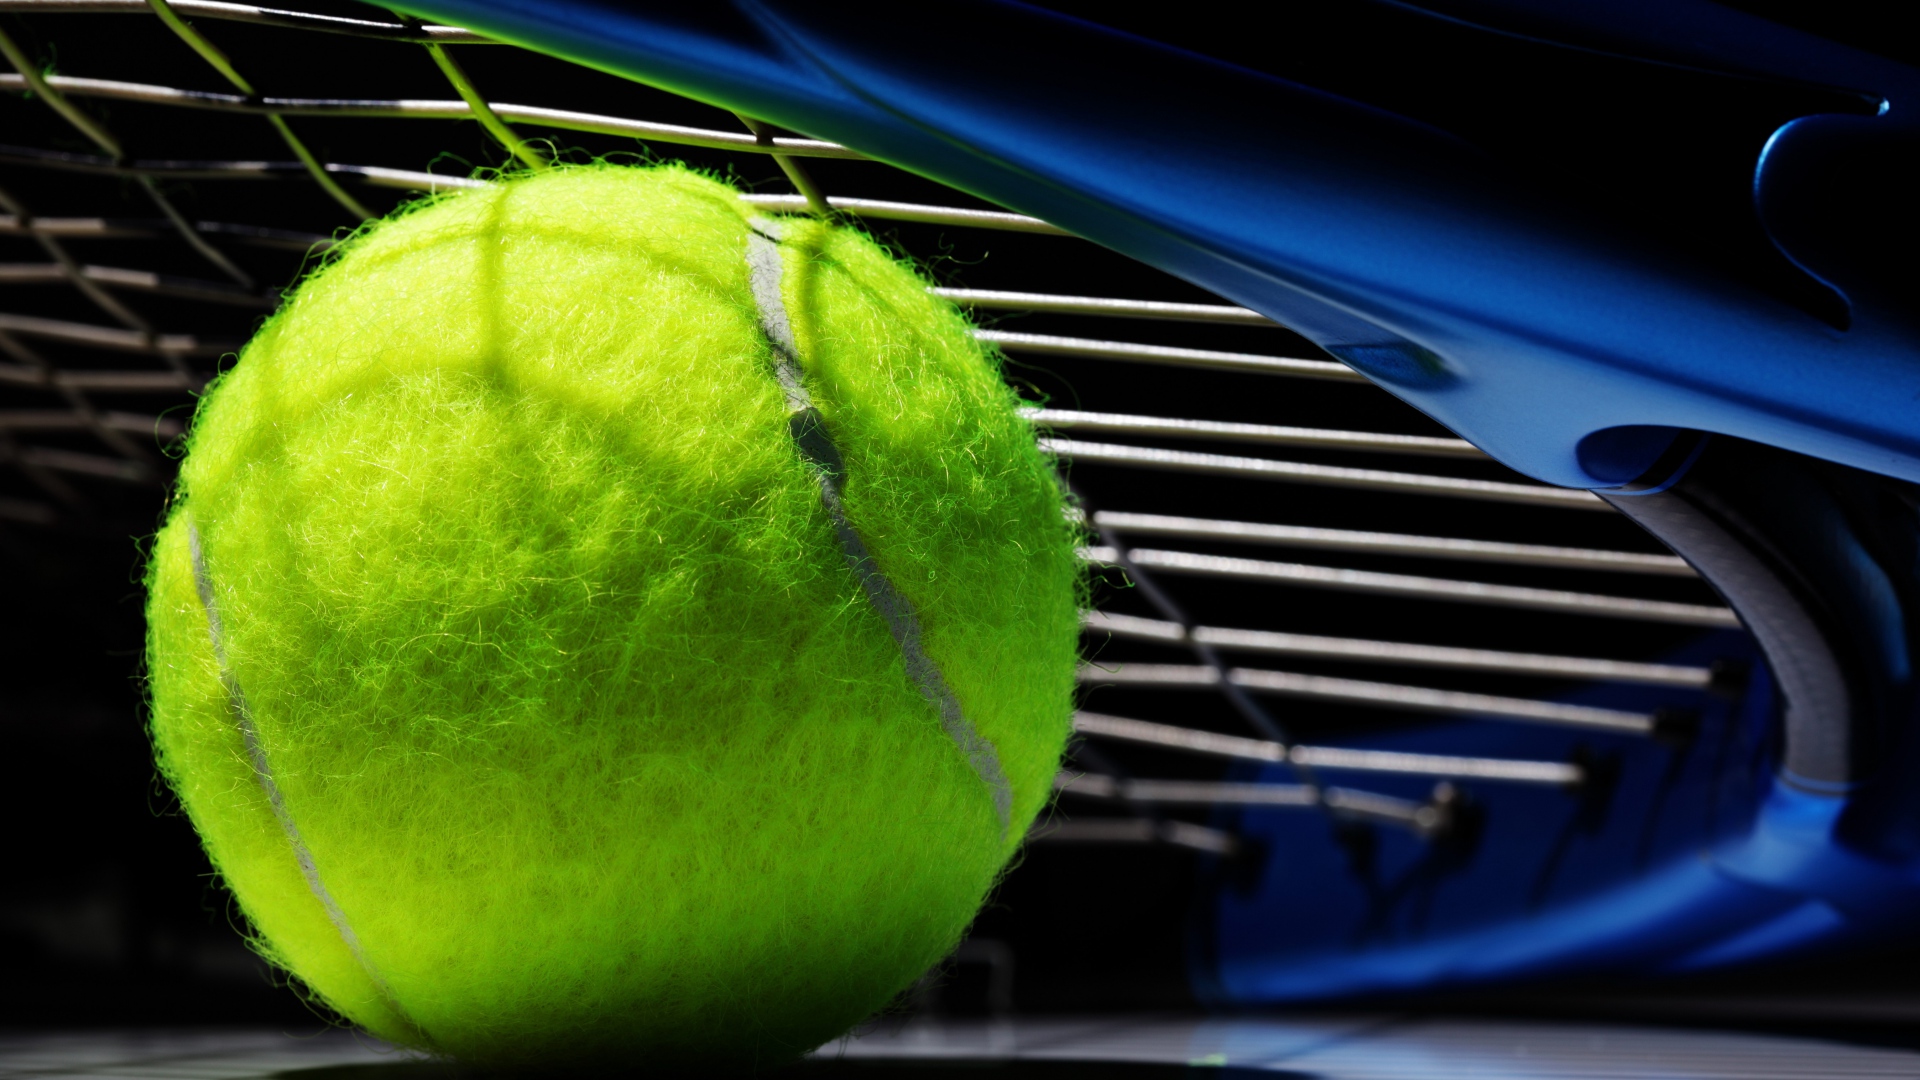 Desktop wallpaper tennis ball tennis sports close up hd image picture background ixkrhg